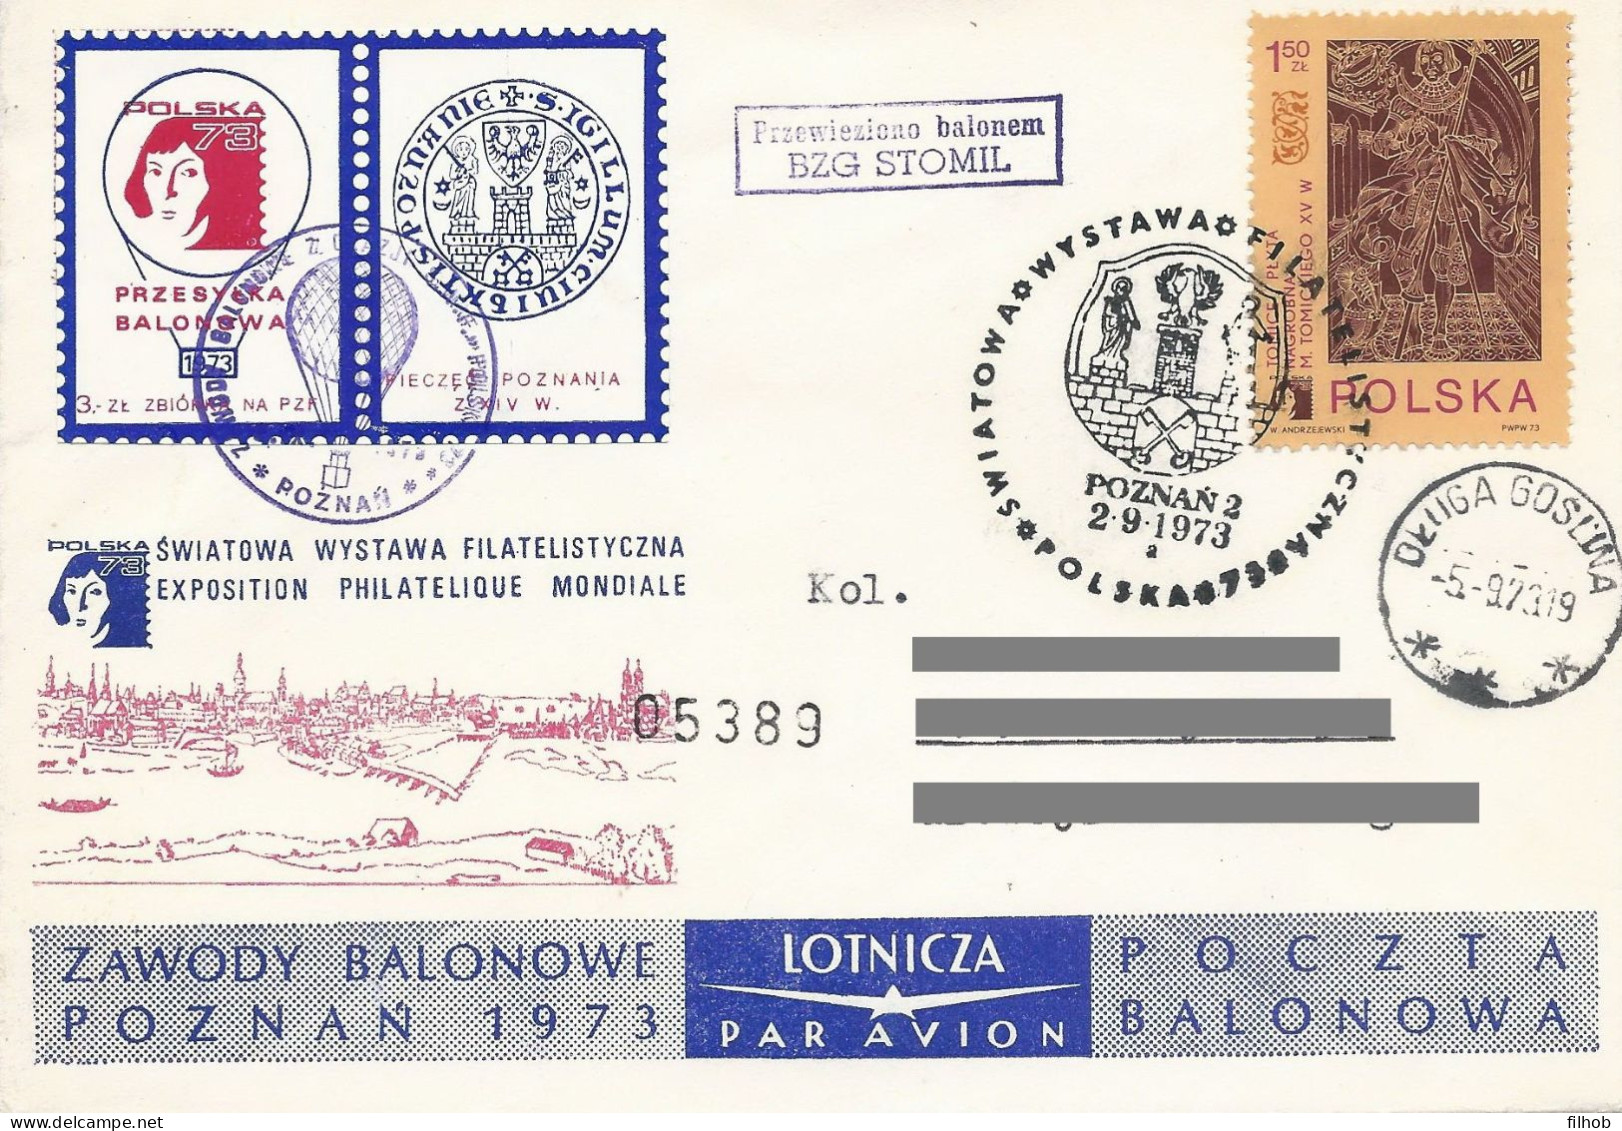 Poland Post - Balloon PBA.1973.poz.sto.B15: Competitions Poznan 73 STOMIL - Balloons